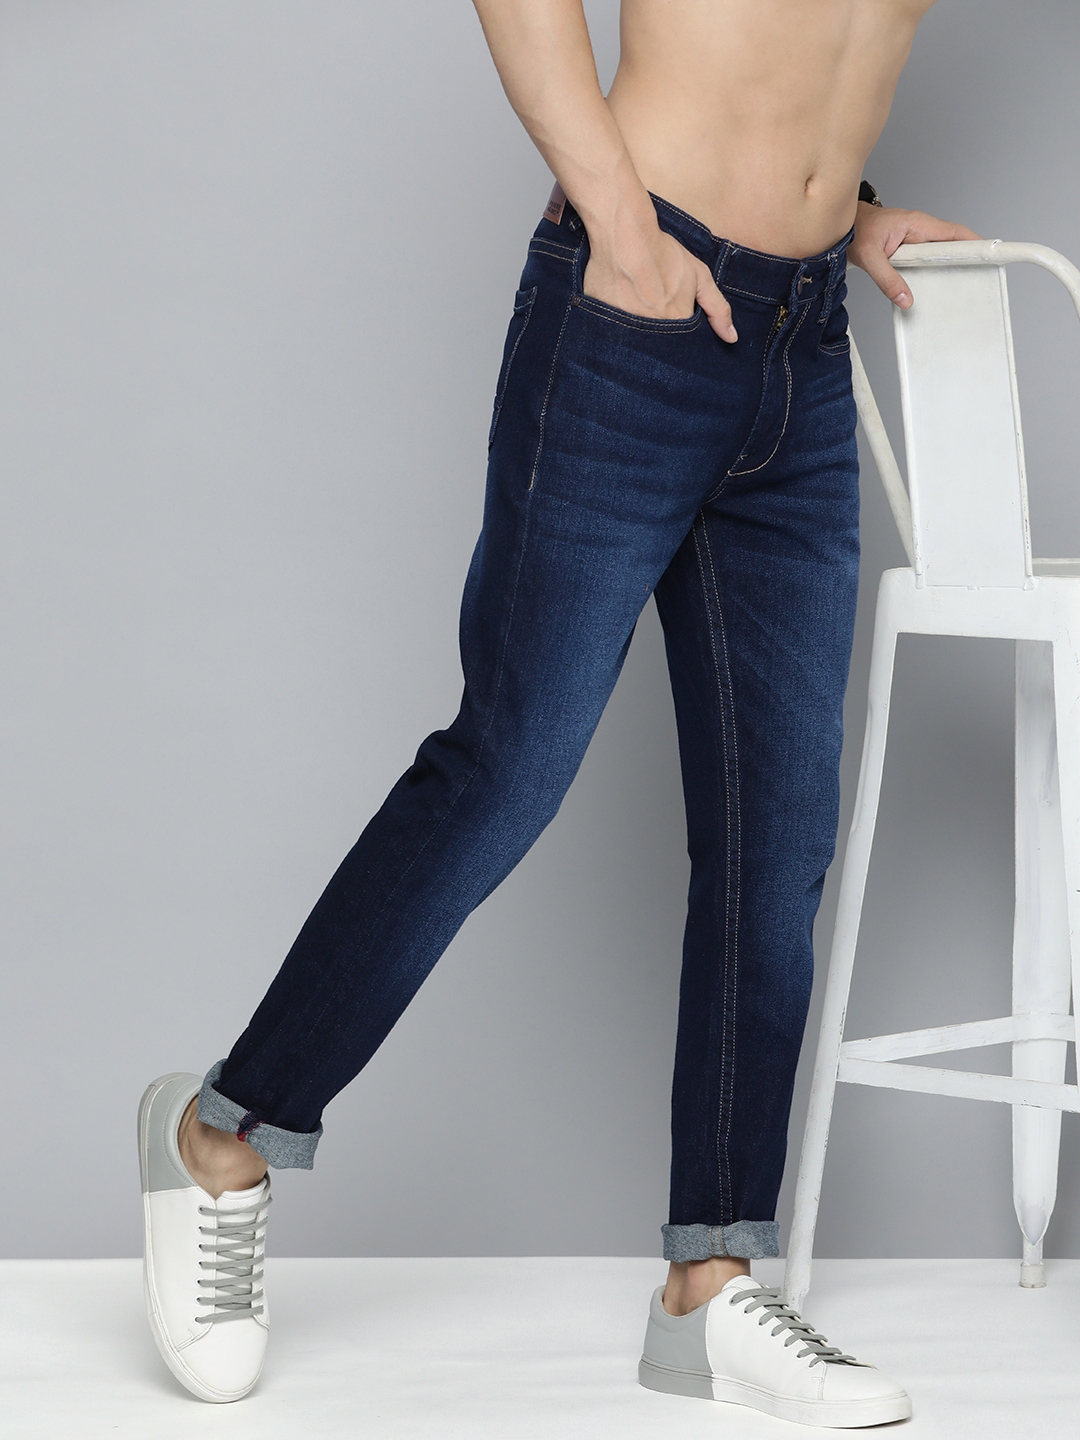 Neo Blue Denim Fade Black Super Skinny Jeans 98% Cotton 2% Spandex